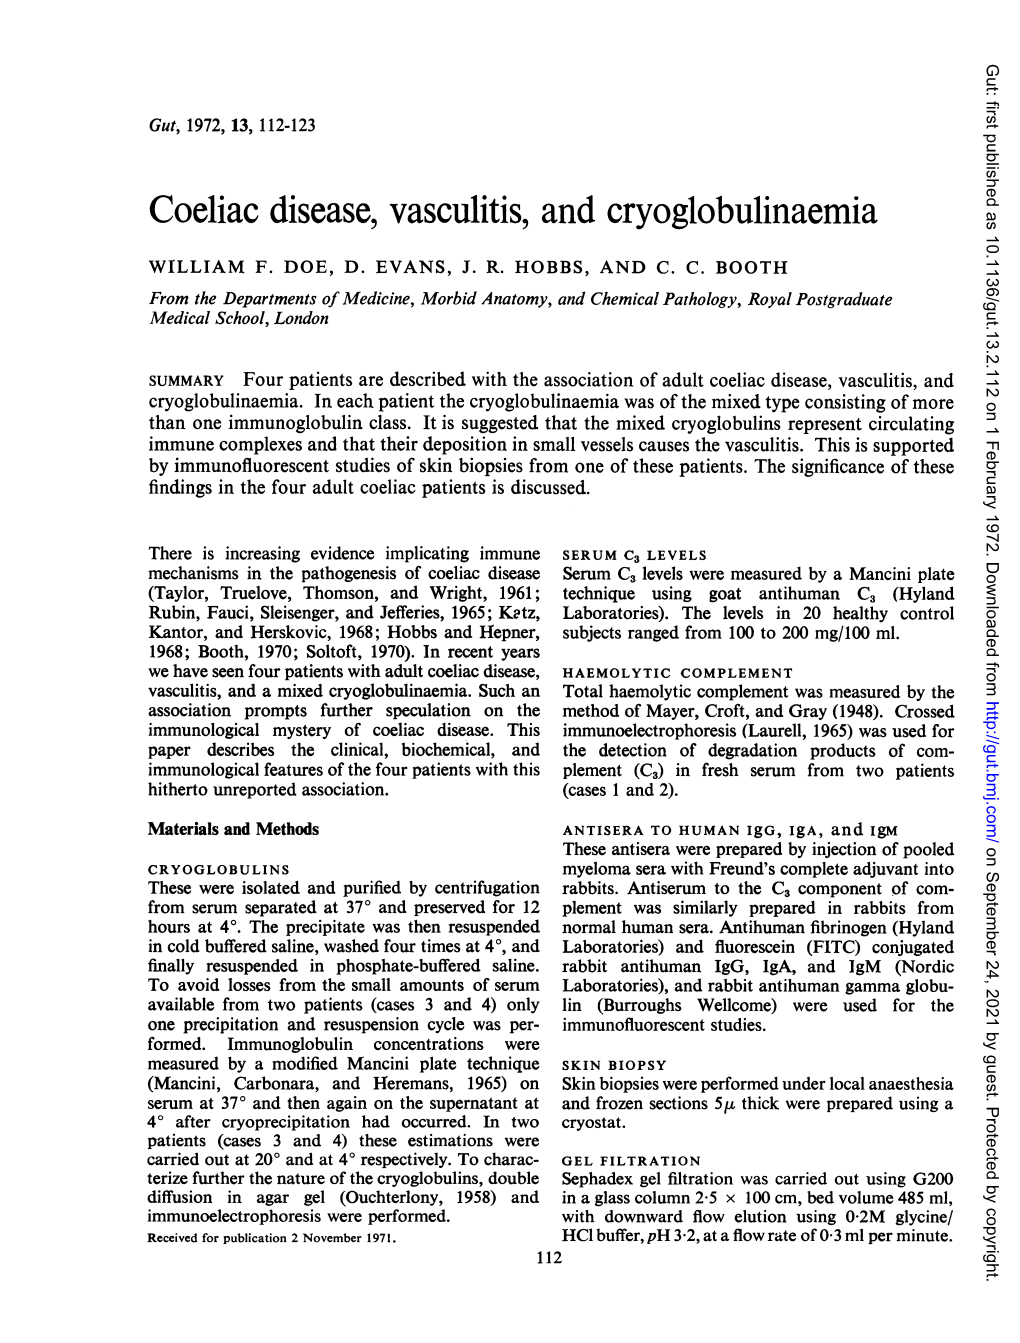 Coeliac Disease, Vasculitis, and Cryoglobulinaemia